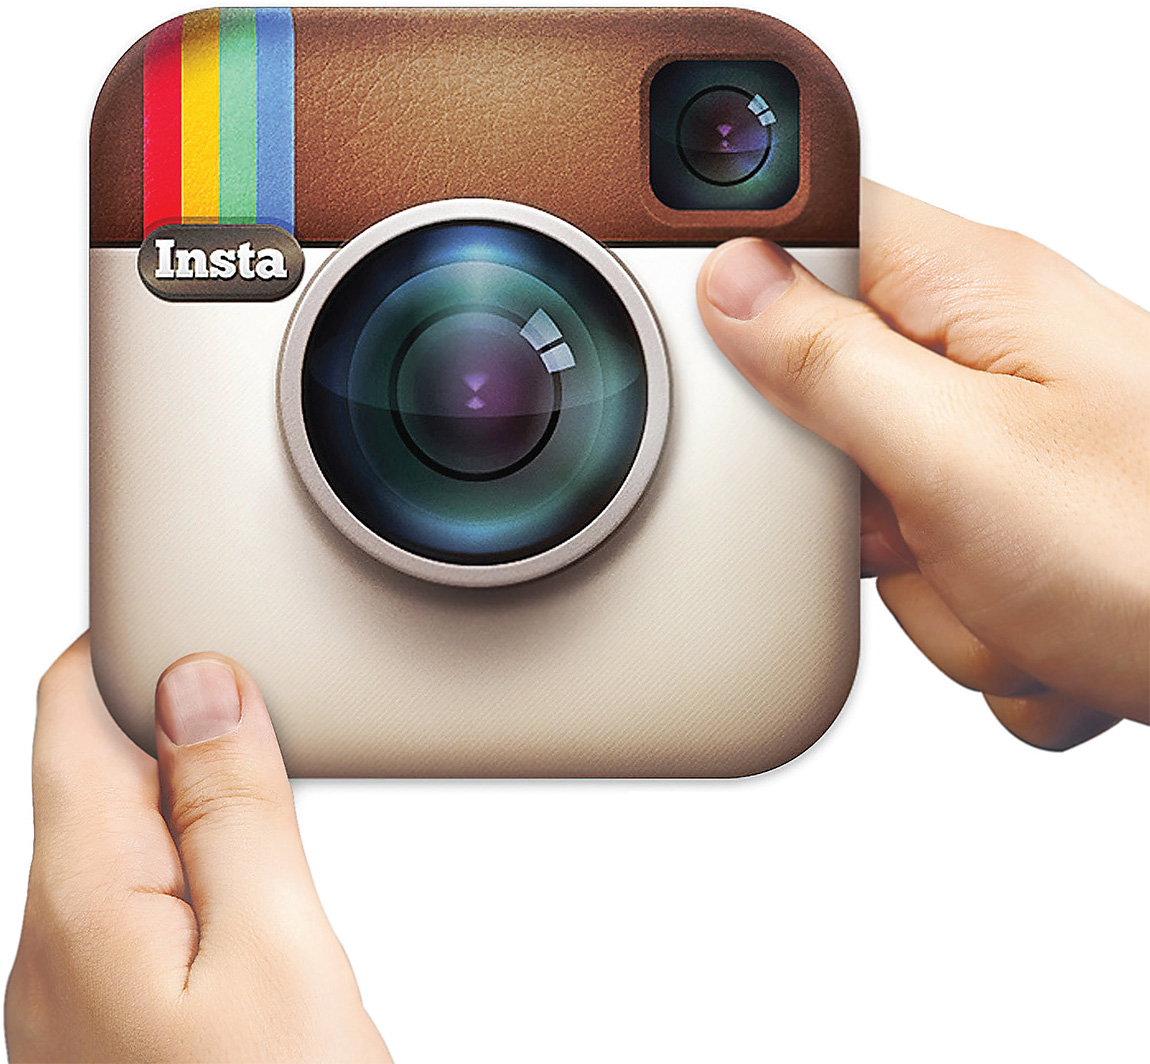 photo sharing websites app instagram